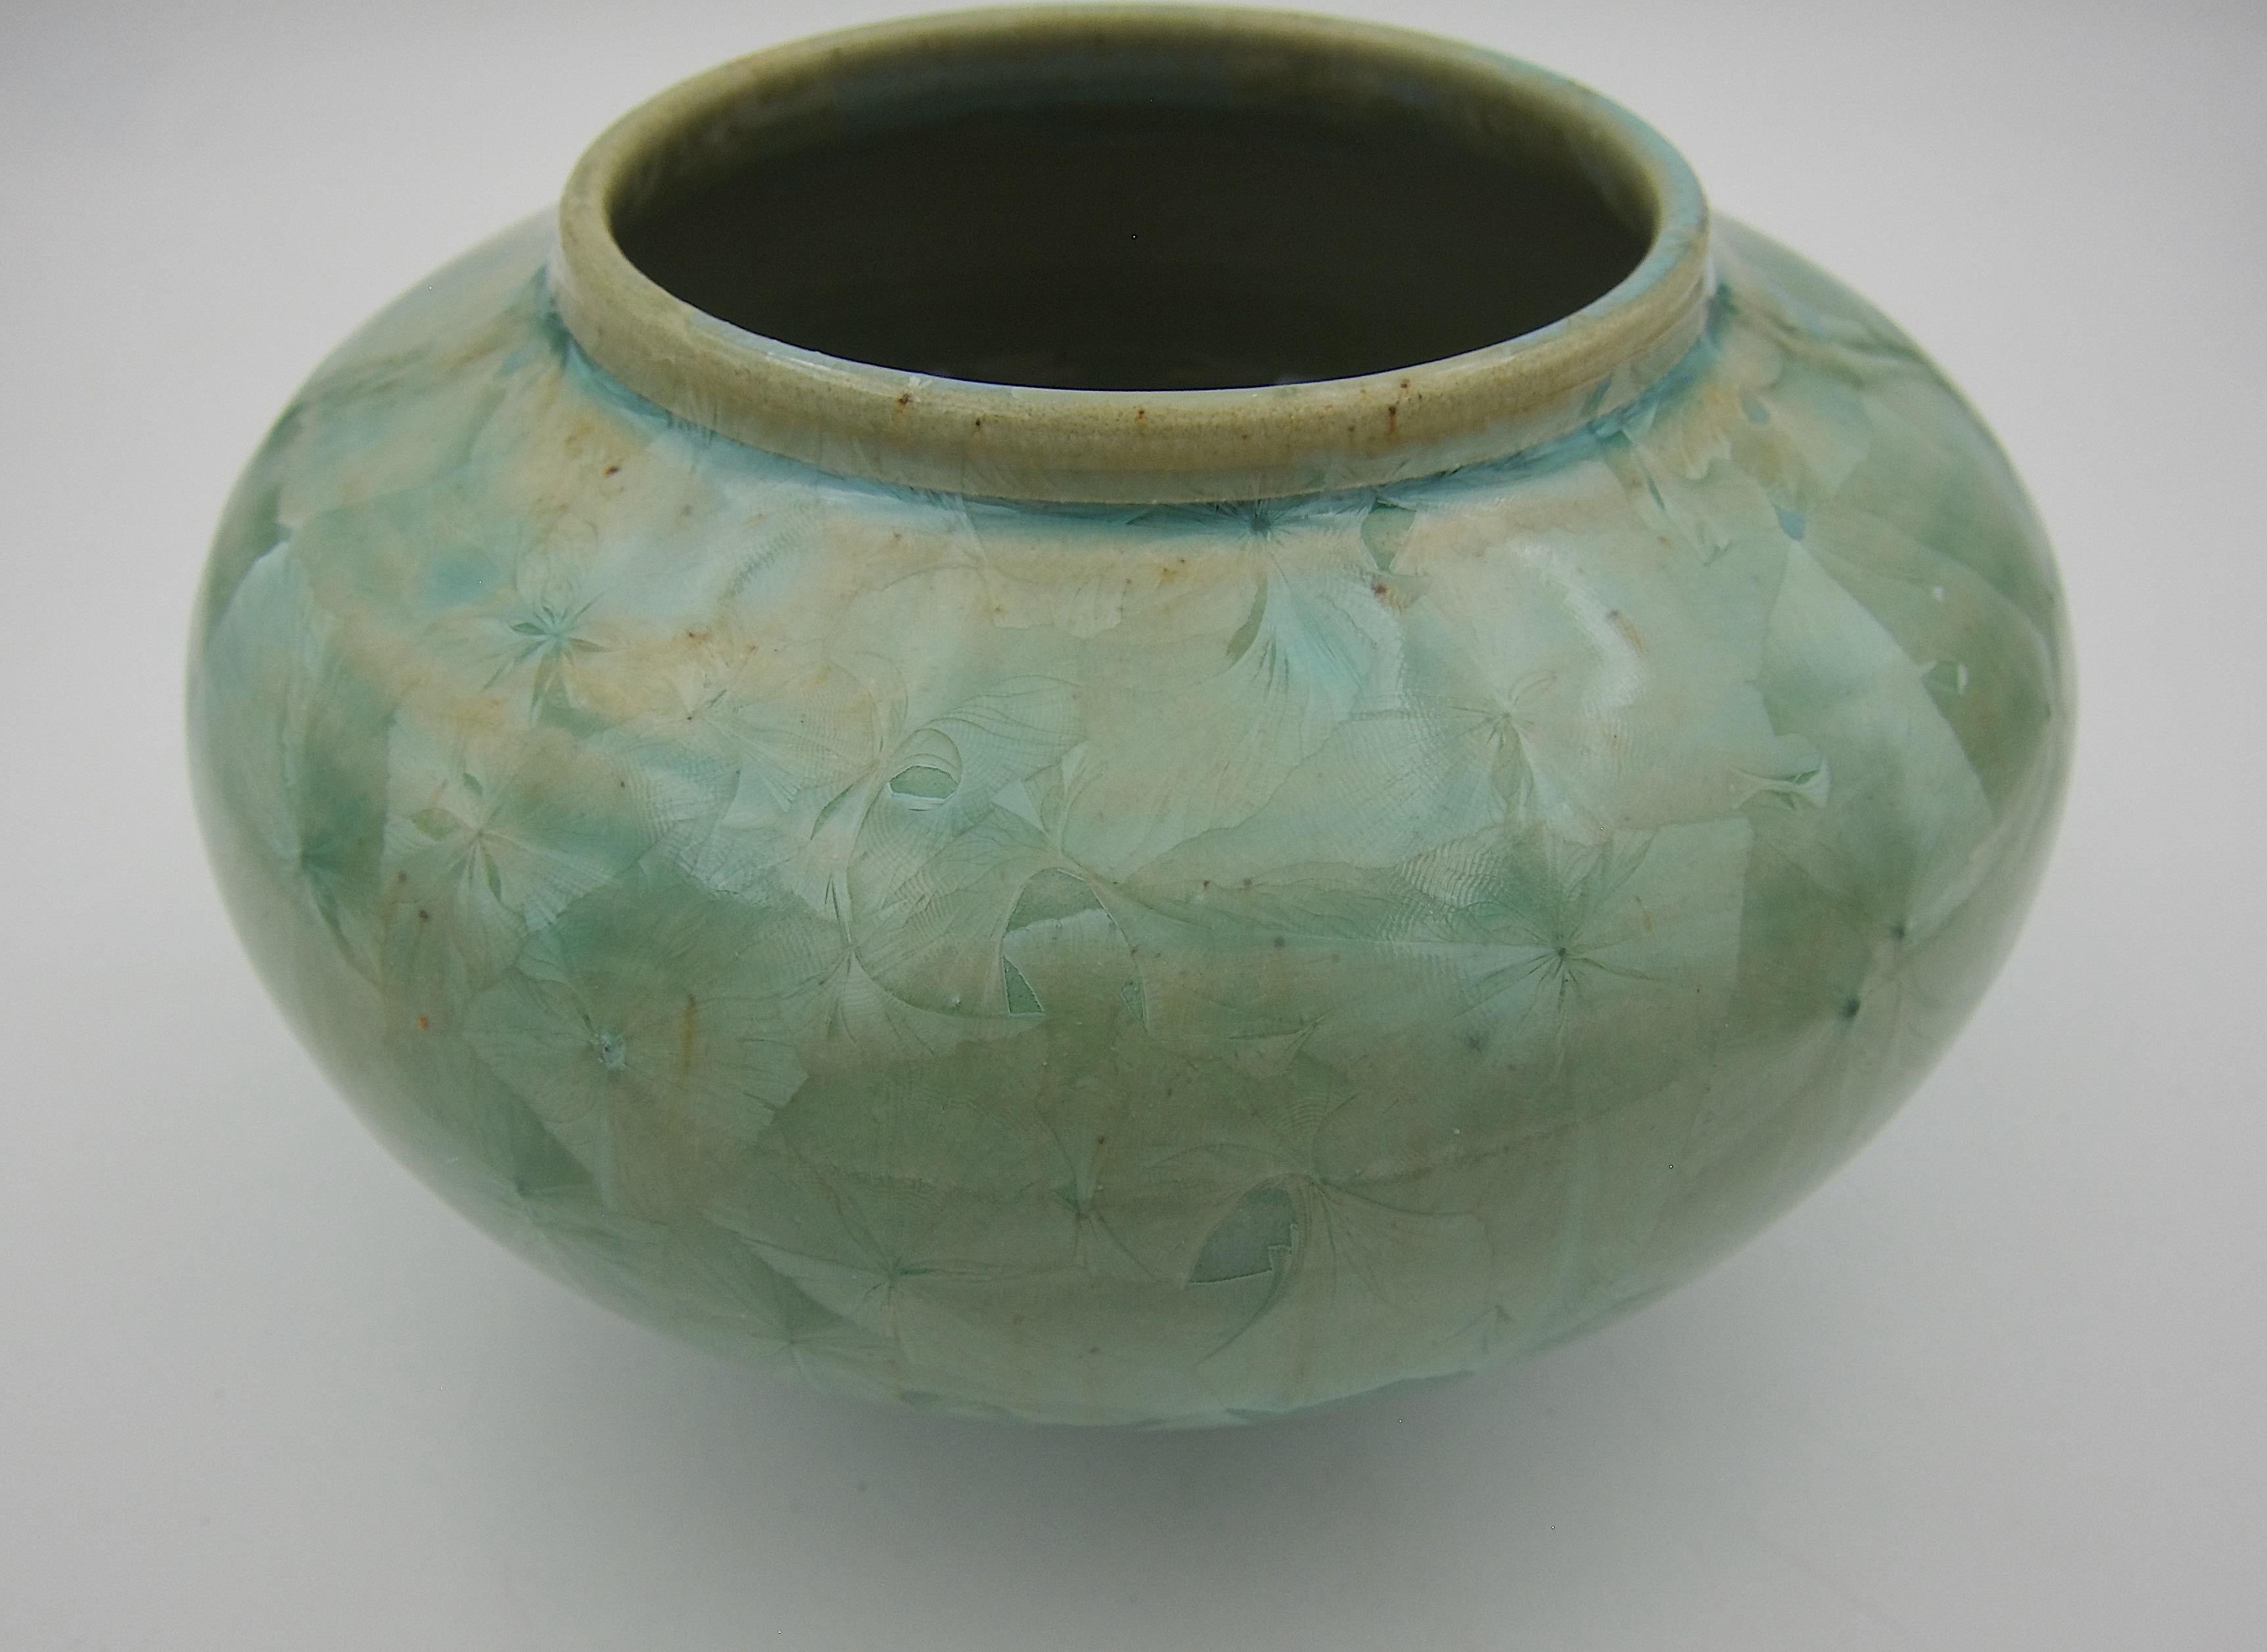 Glazed Vintage Buckingham Art Pottery Vase with Green Crystalline Glaze, 1994